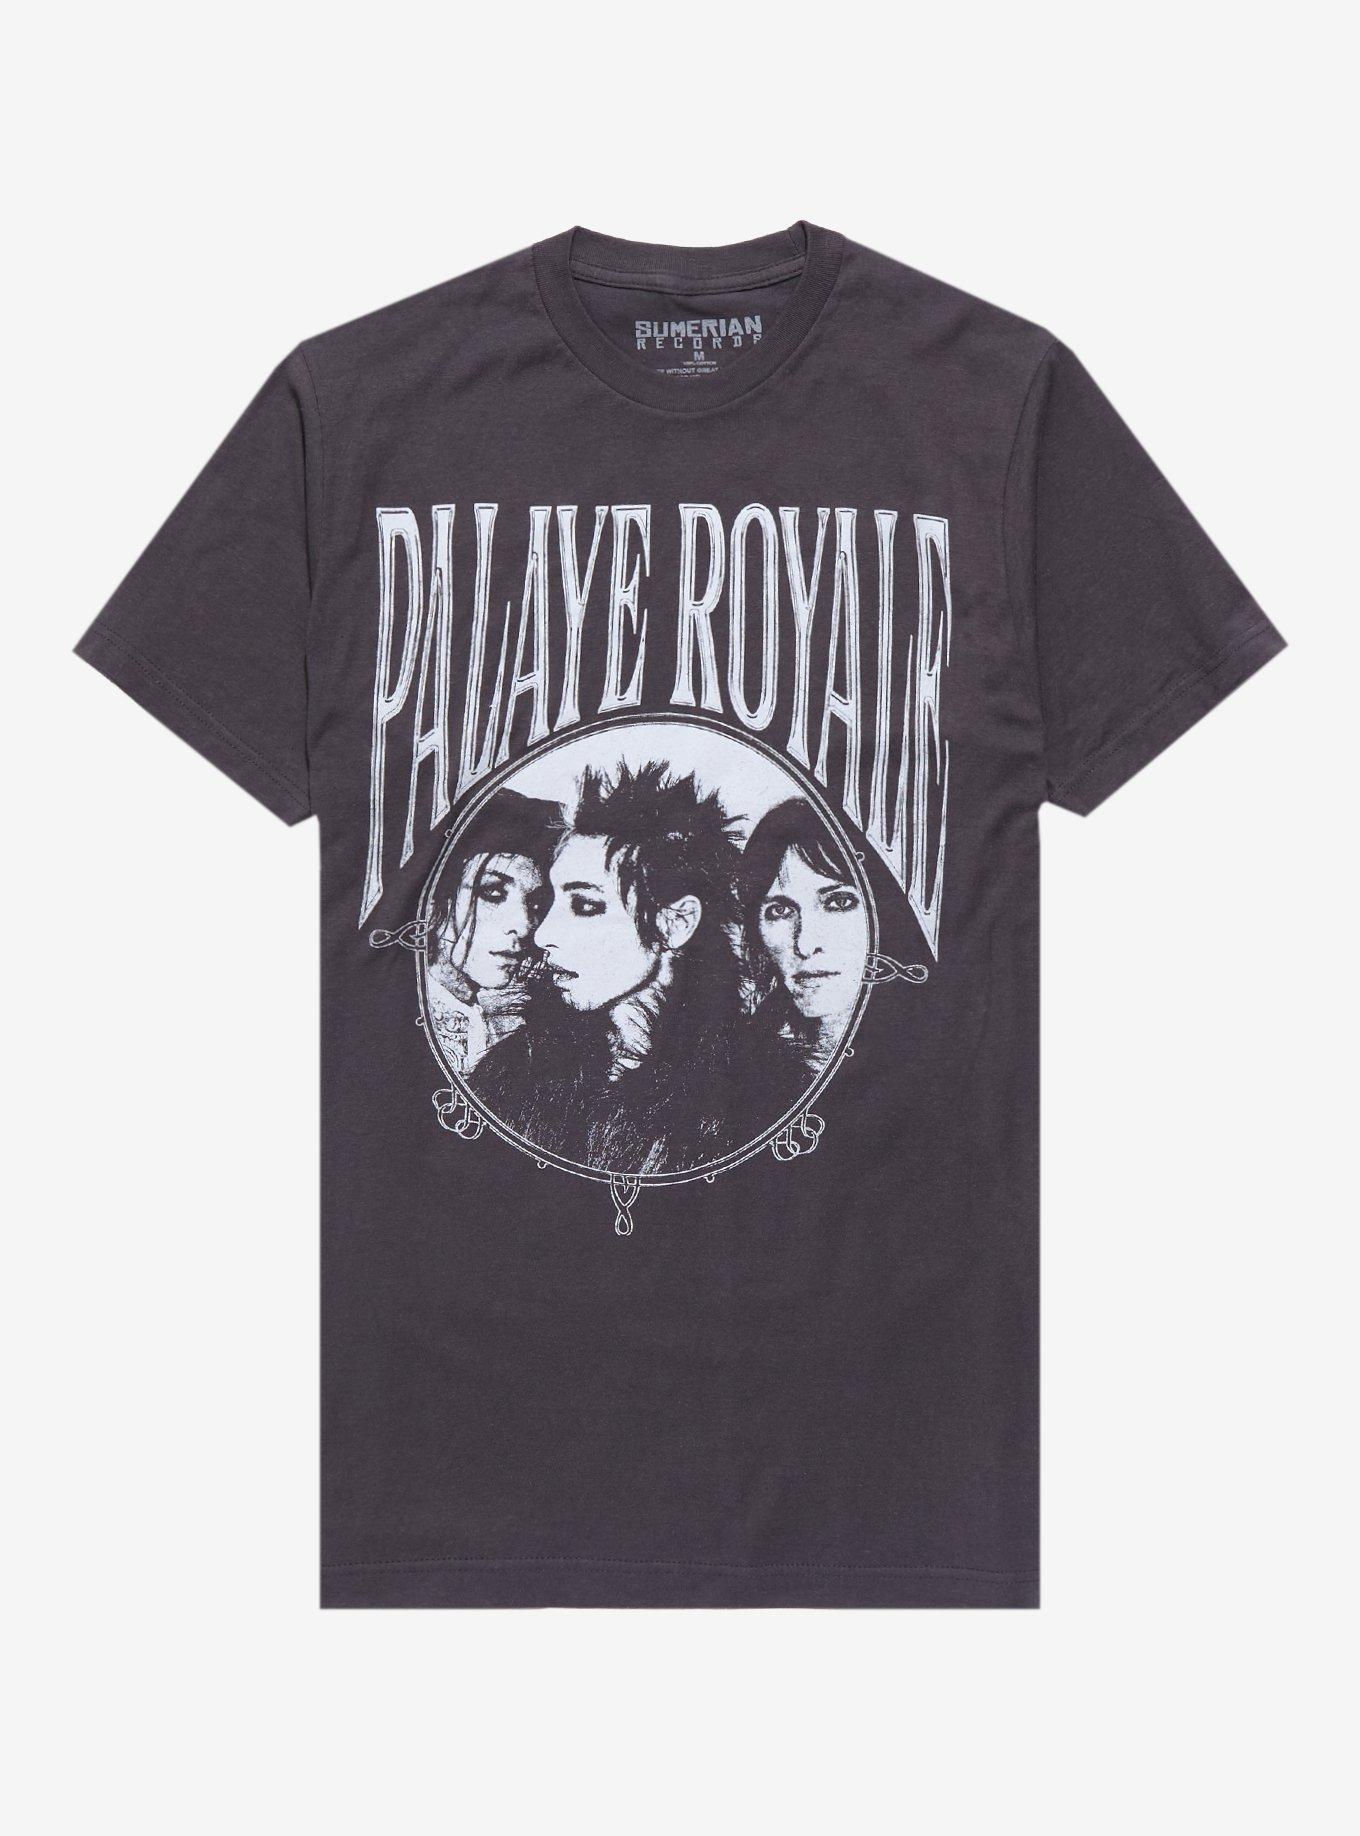 Palaye Royale Band Portrait Boyfriend Fit T-Shirt, CHARCOAL, hi-res